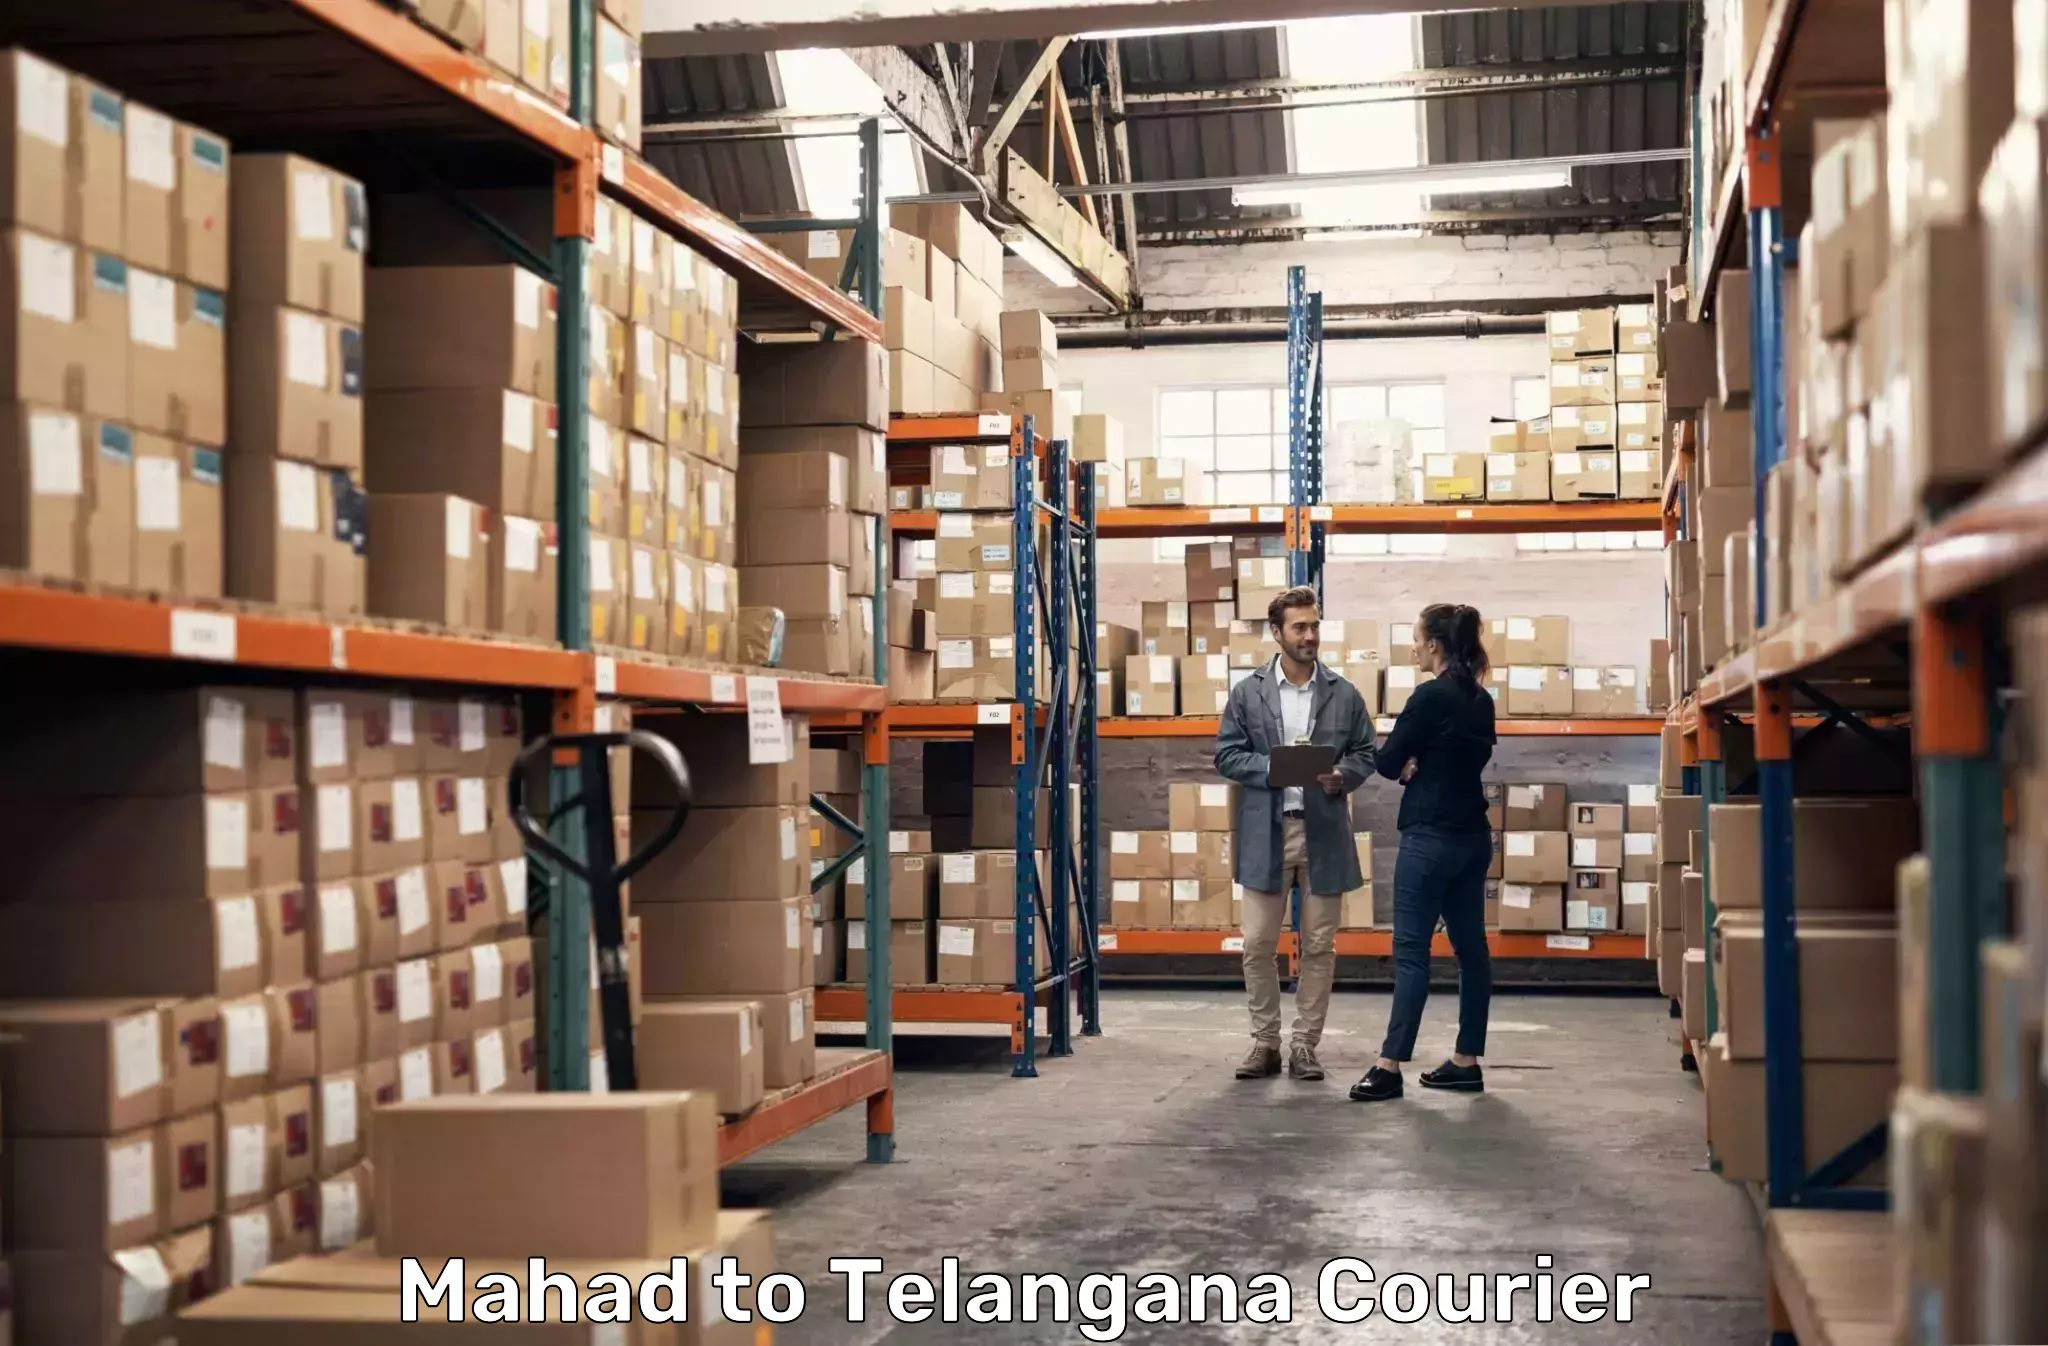 User-friendly courier app Mahad to Telangana